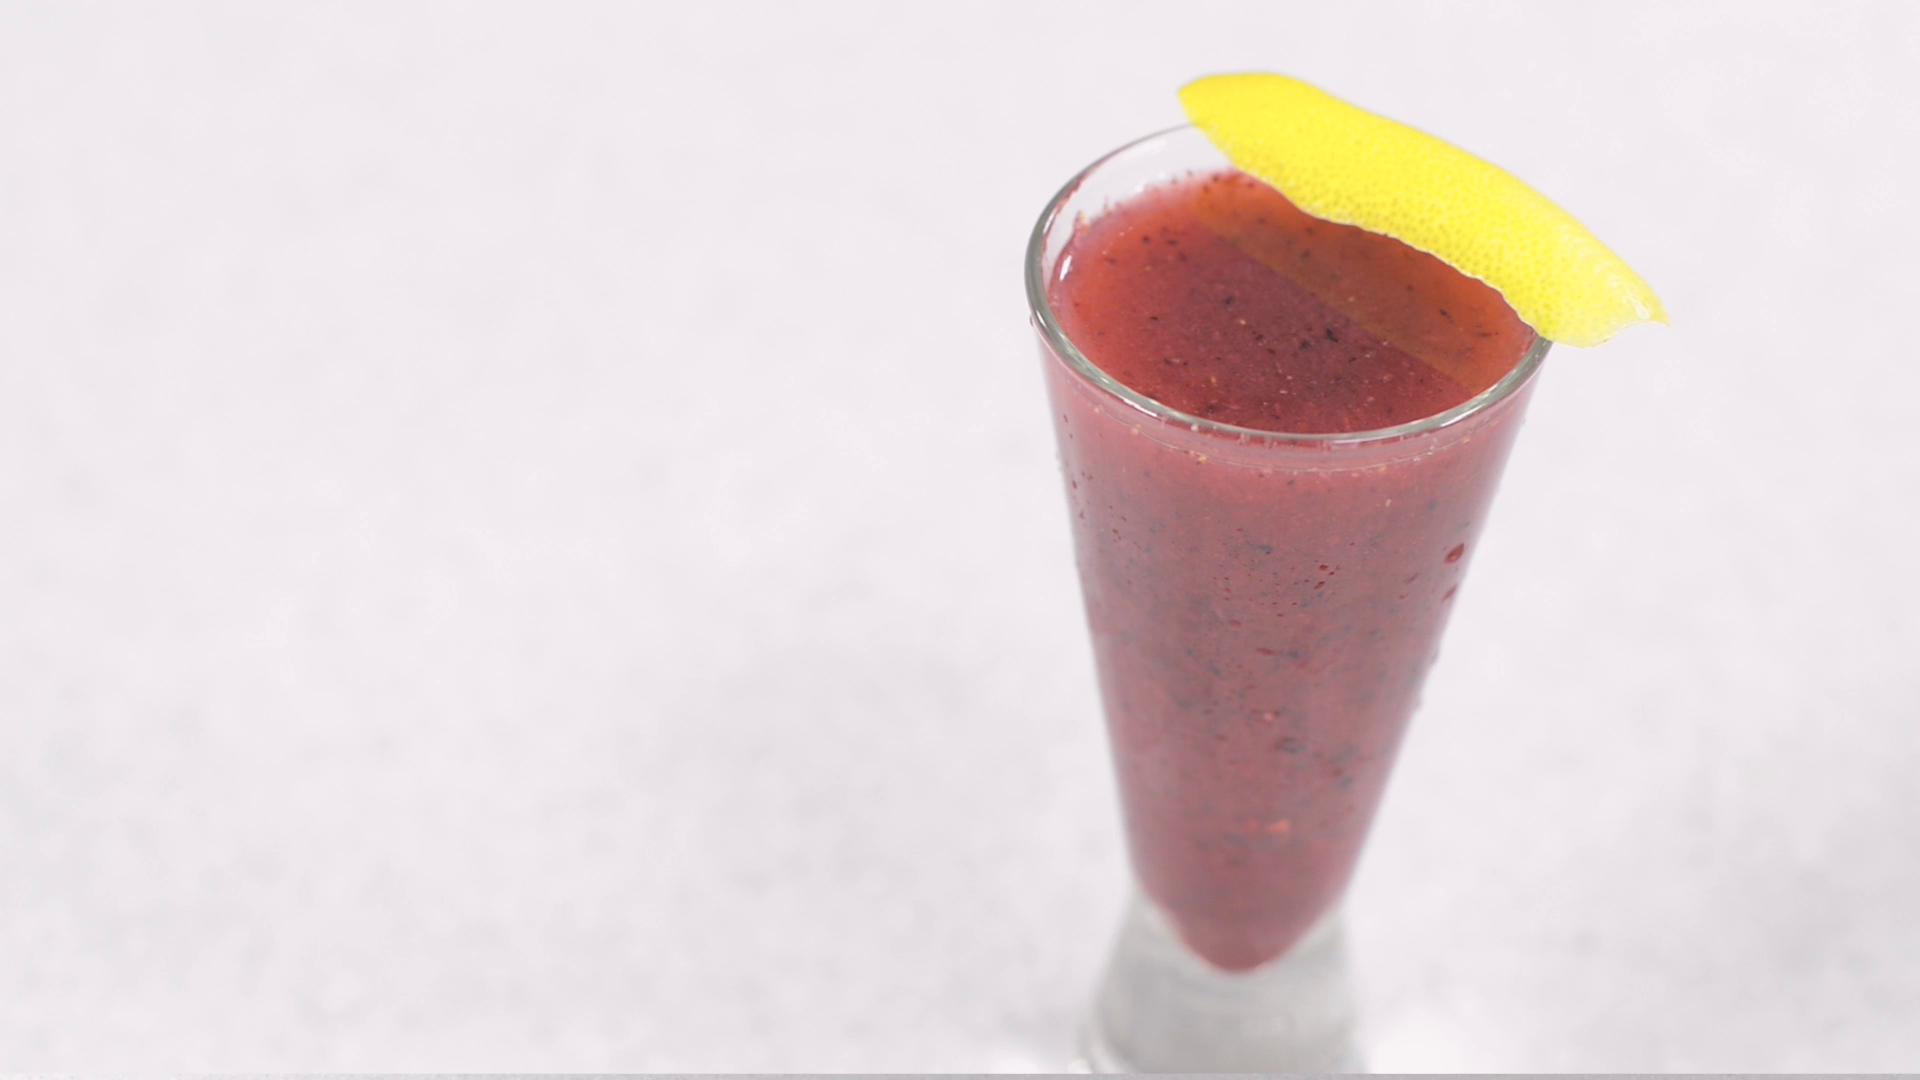 Cocktail cu sampanie si fructe de padure - Reteta video